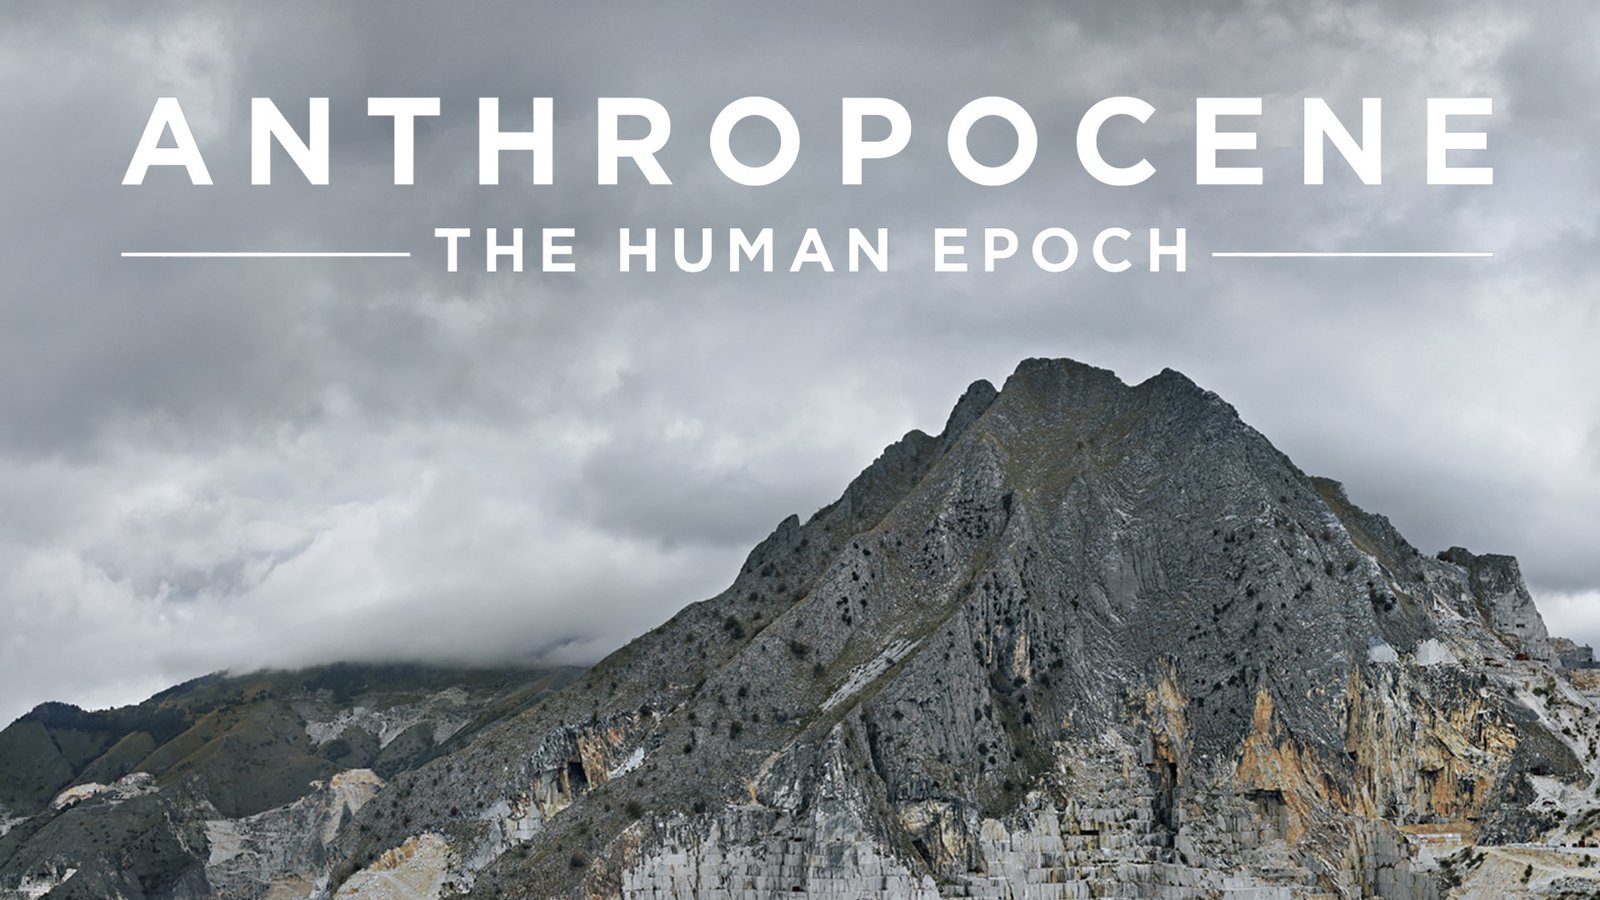 Anthropocene Trailer still image